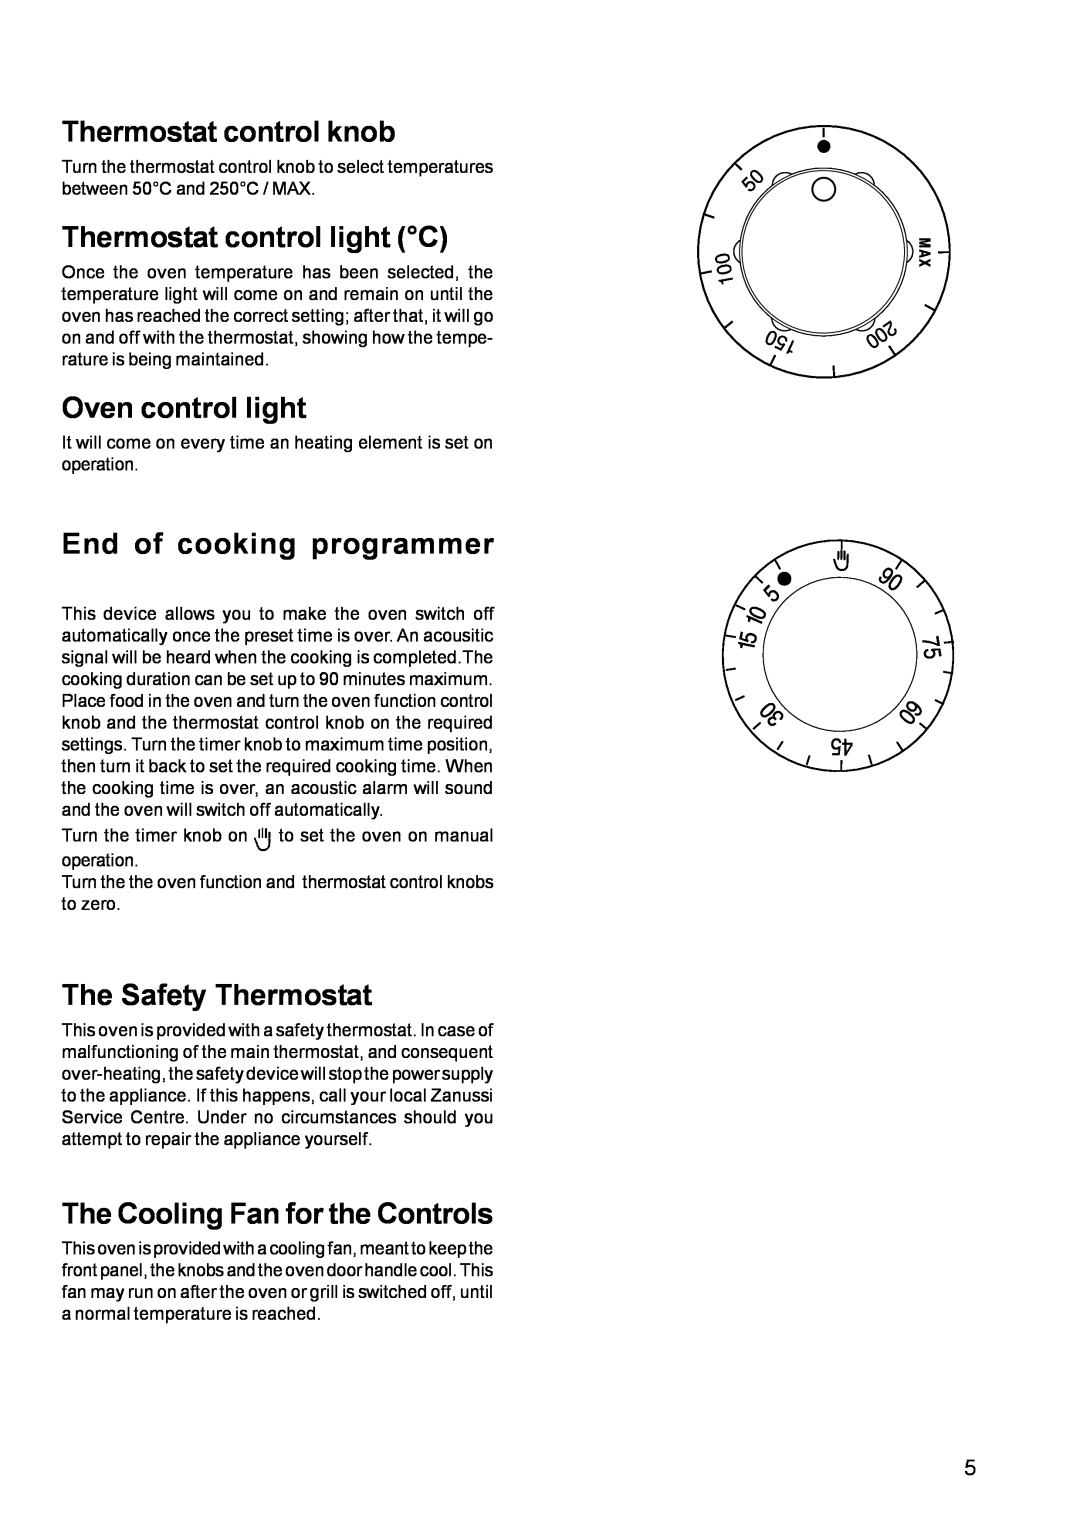 Zanussi manual Thermostat control knob, Thermostat control light C, Oven control light, End of cooking programmer 